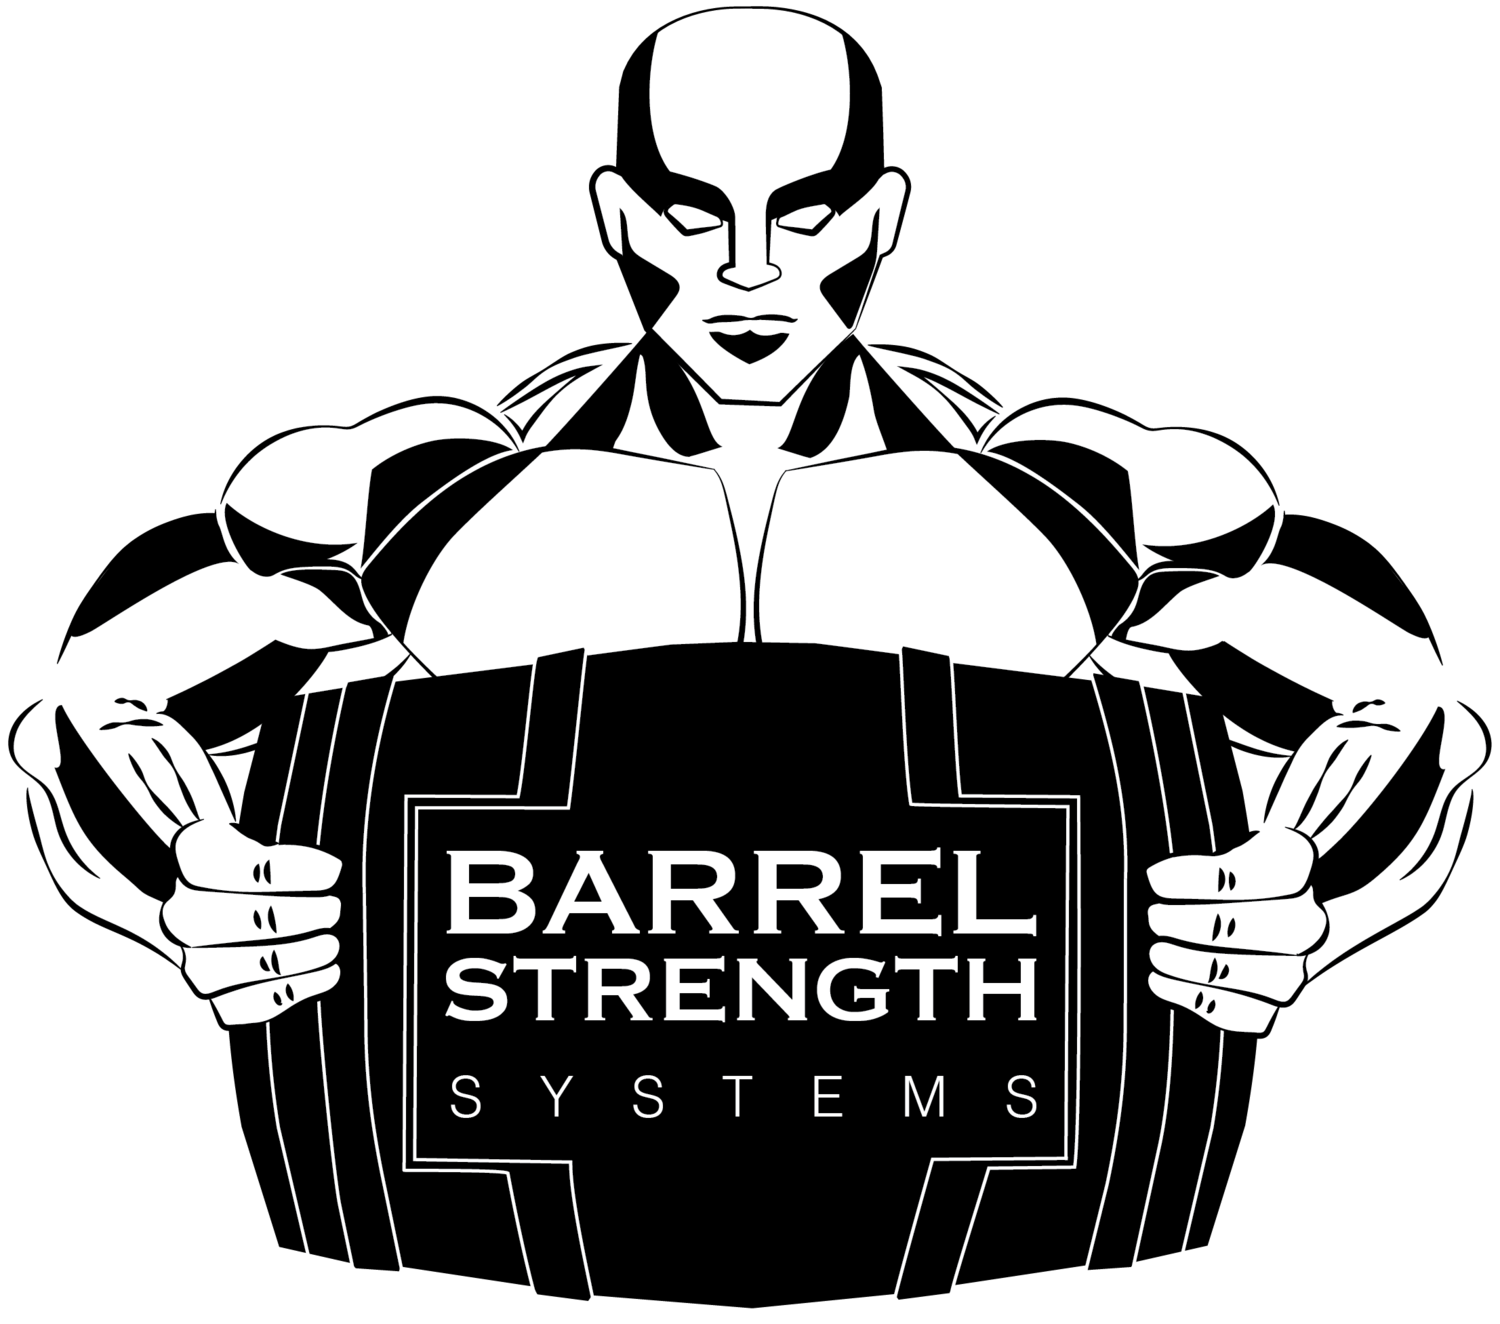 Barrel Strength Systems